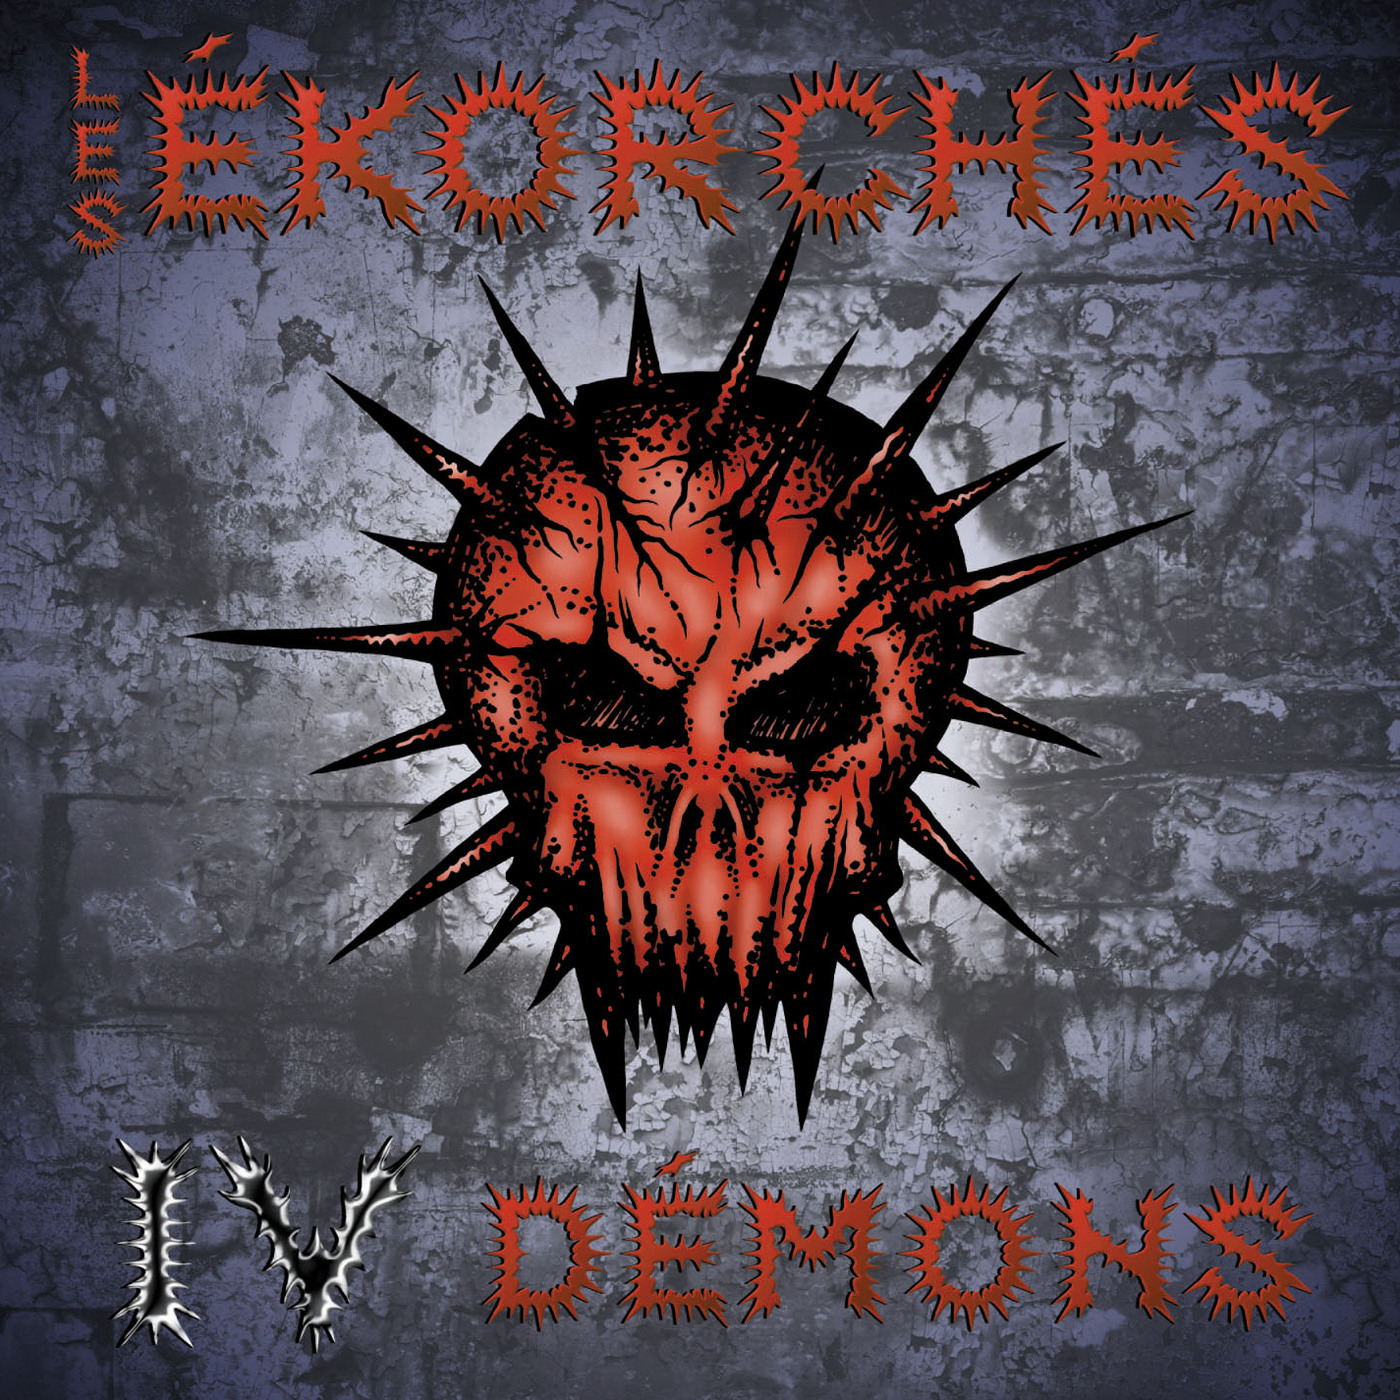 Les Ekorchés - 4 démons